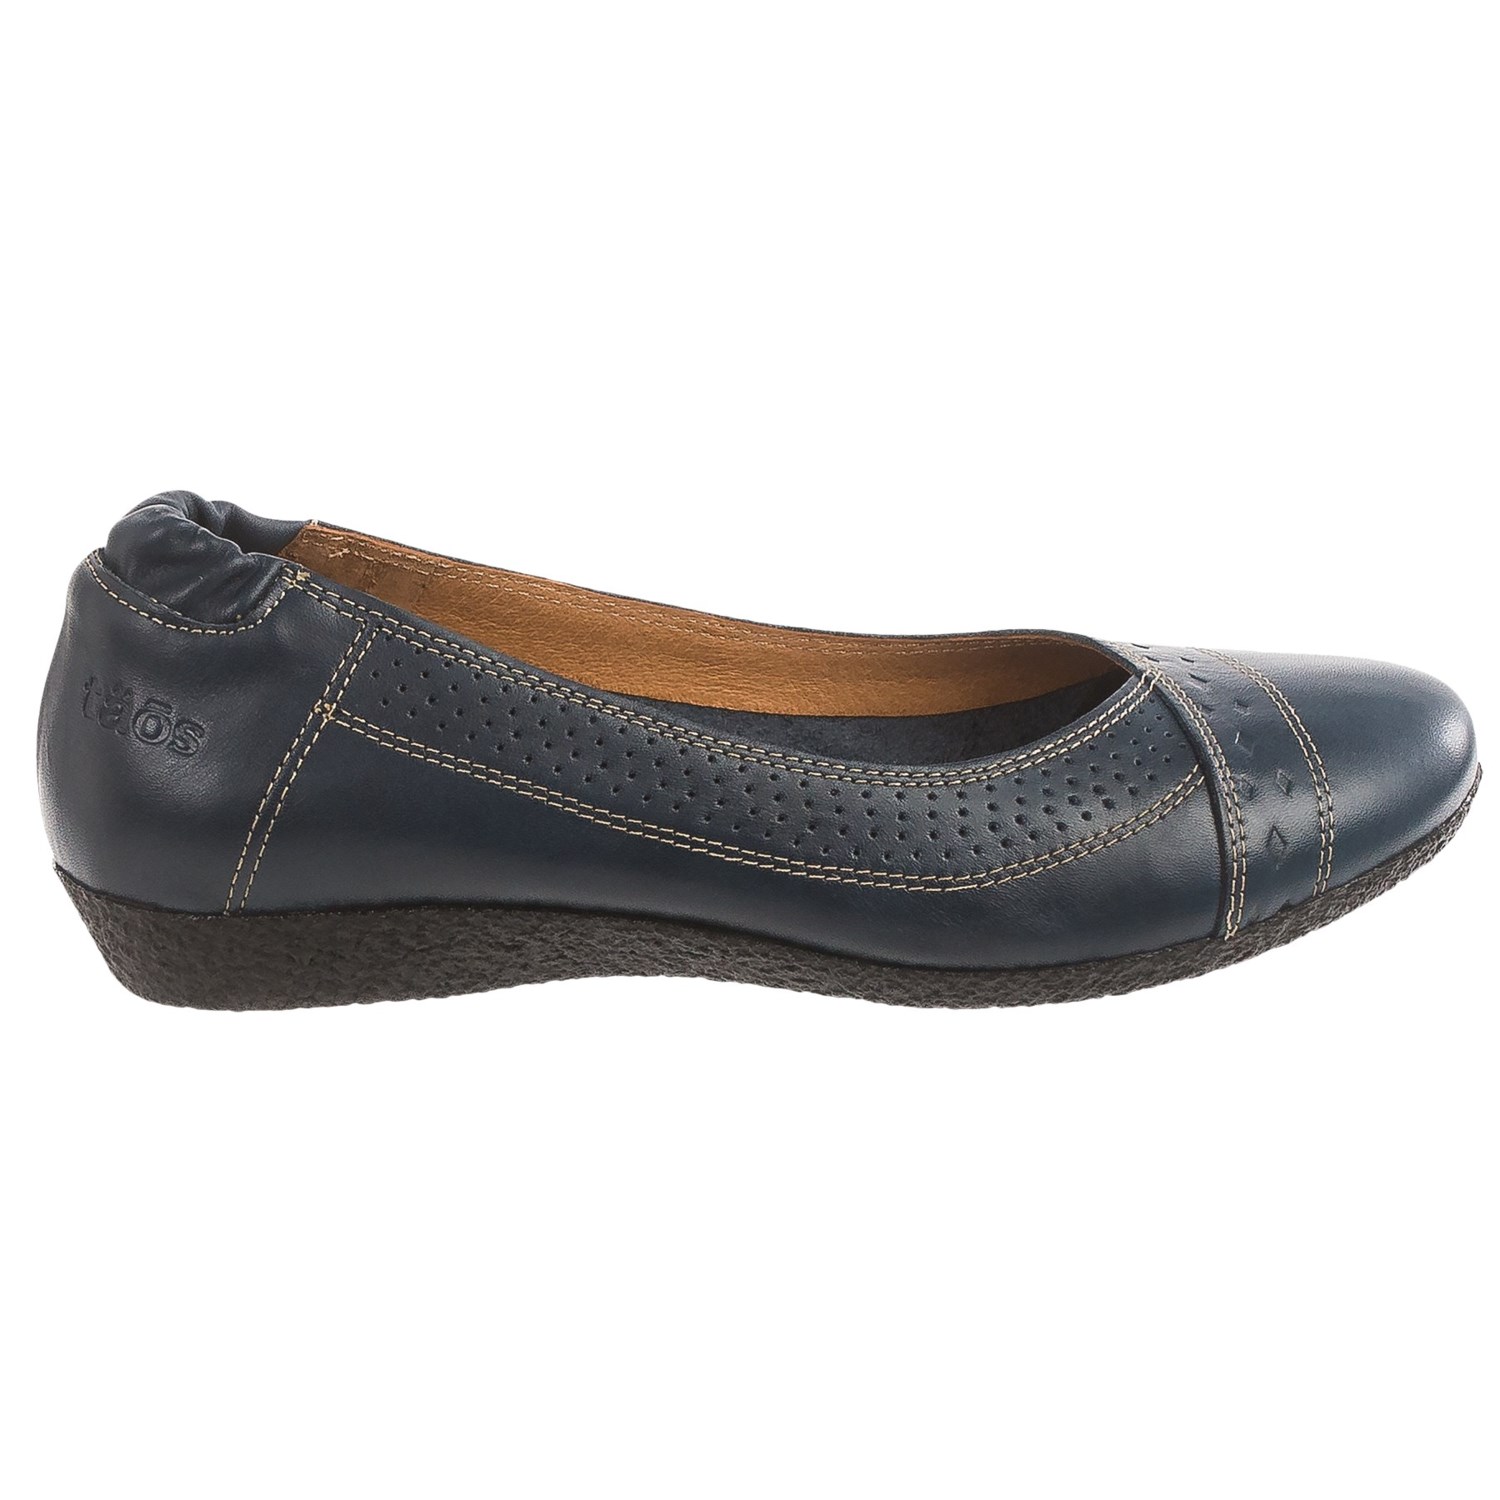 Taos Footwear Sleek Flats (For Women) - Save 85%